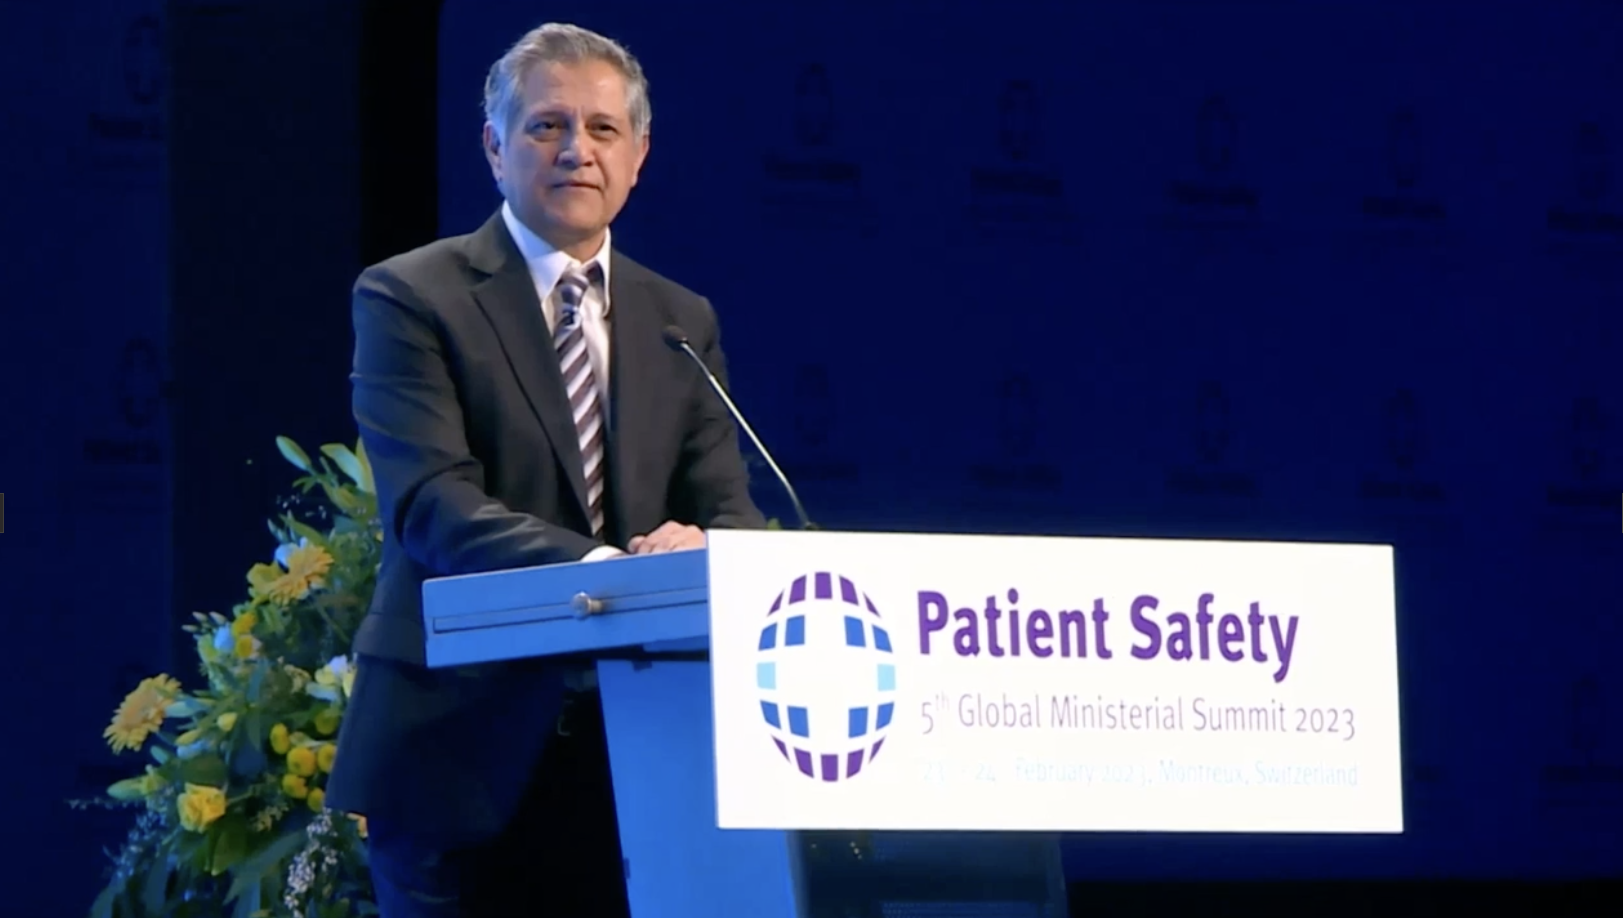 joe kiani delivering a talk on patient safety